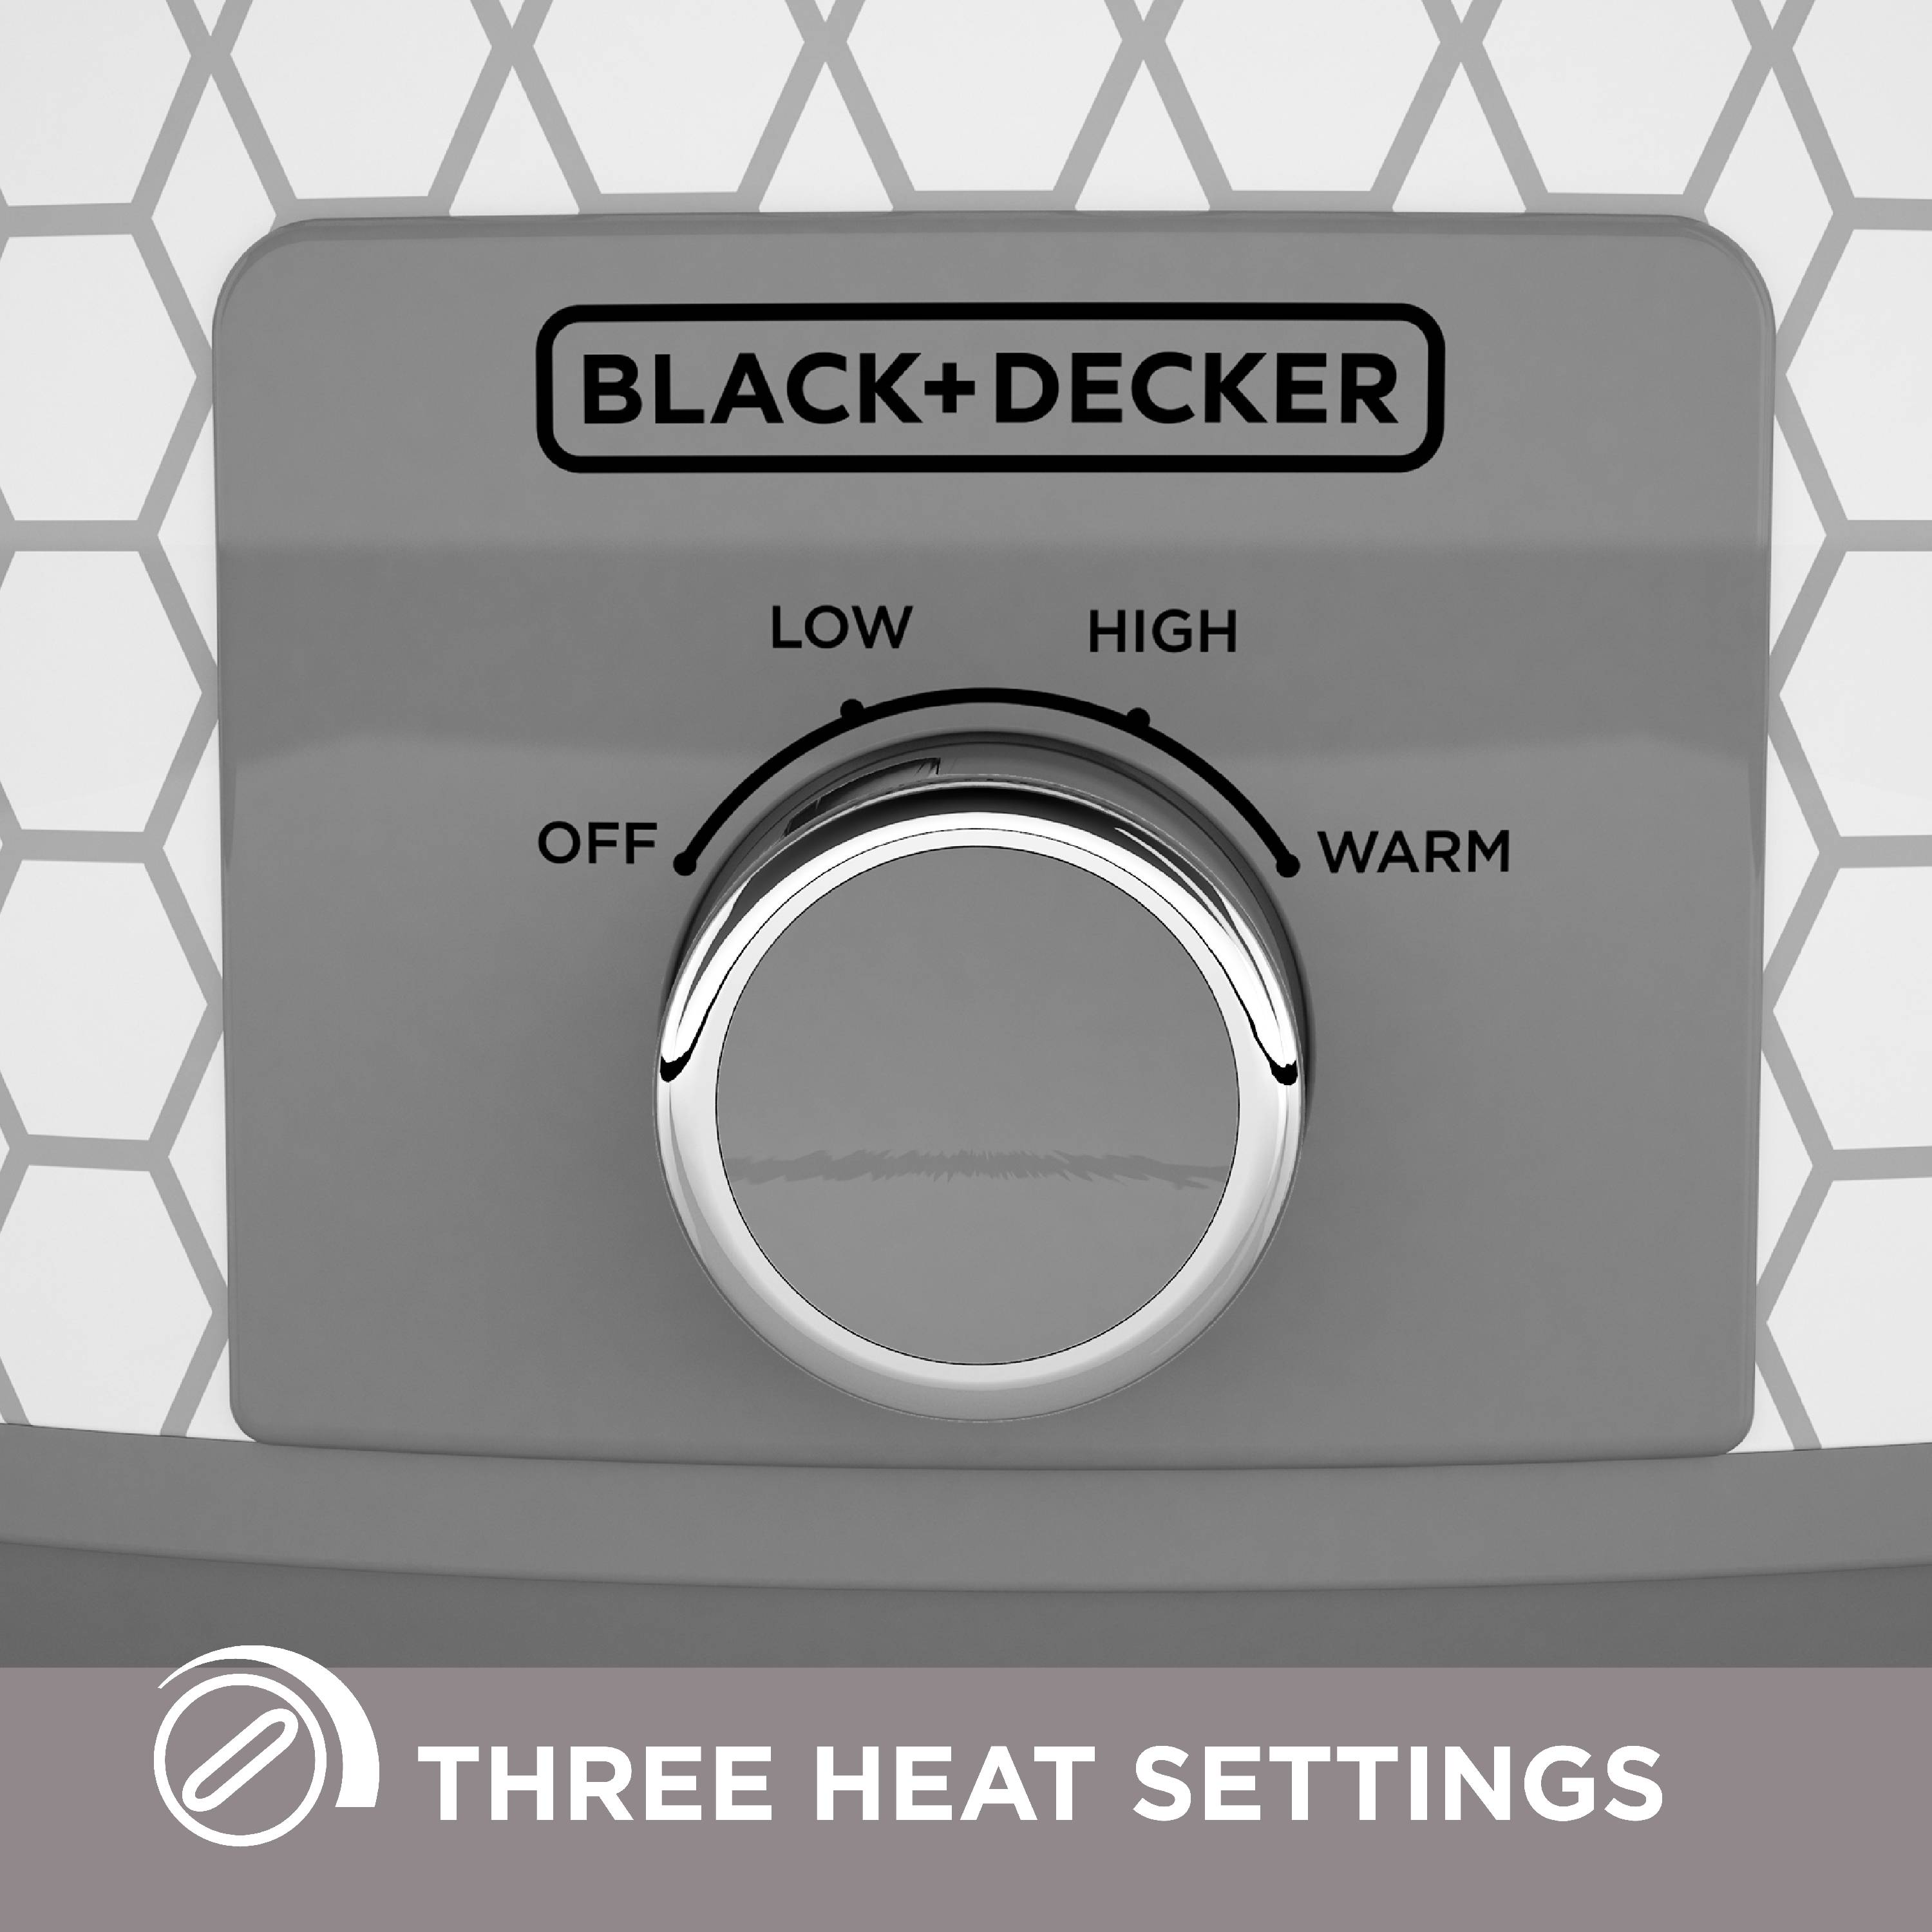 BLACK+DECKER 7 Quart Dial Control Slow Cooker, White/Gray Pattern, SC1007D - image 4 of 14